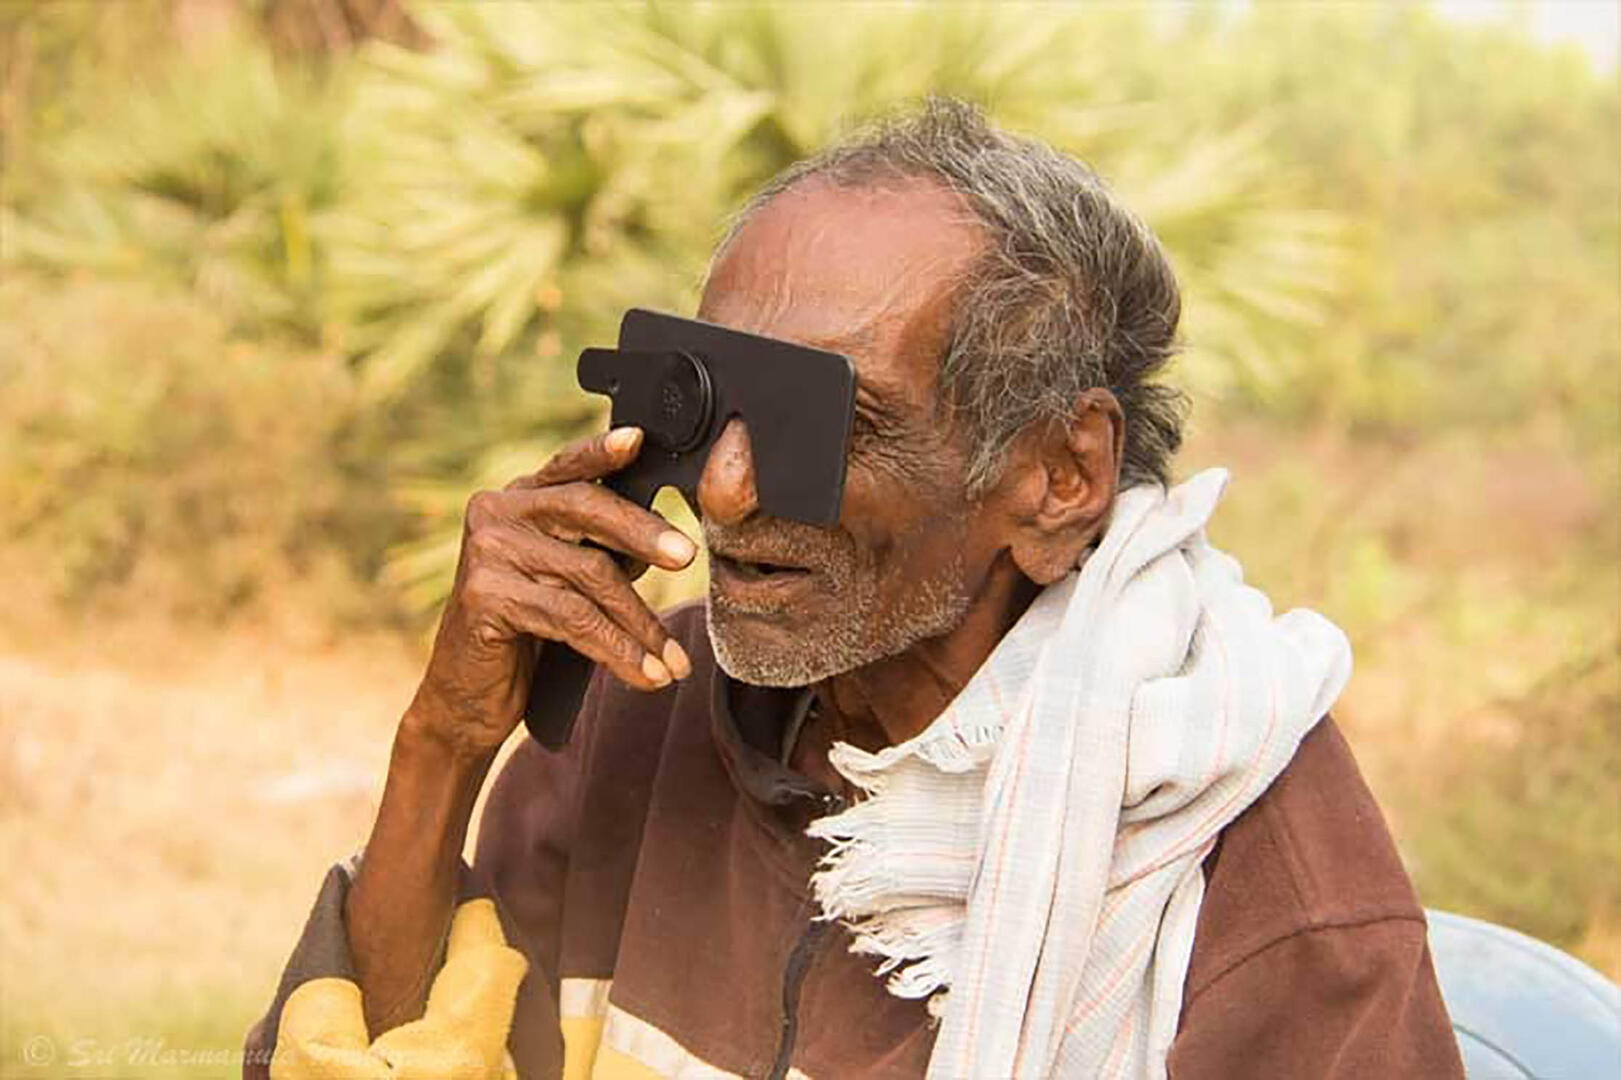 LVPEI & Standard Chartered Bank Launch a Community Eye Screening Program in Siddipet